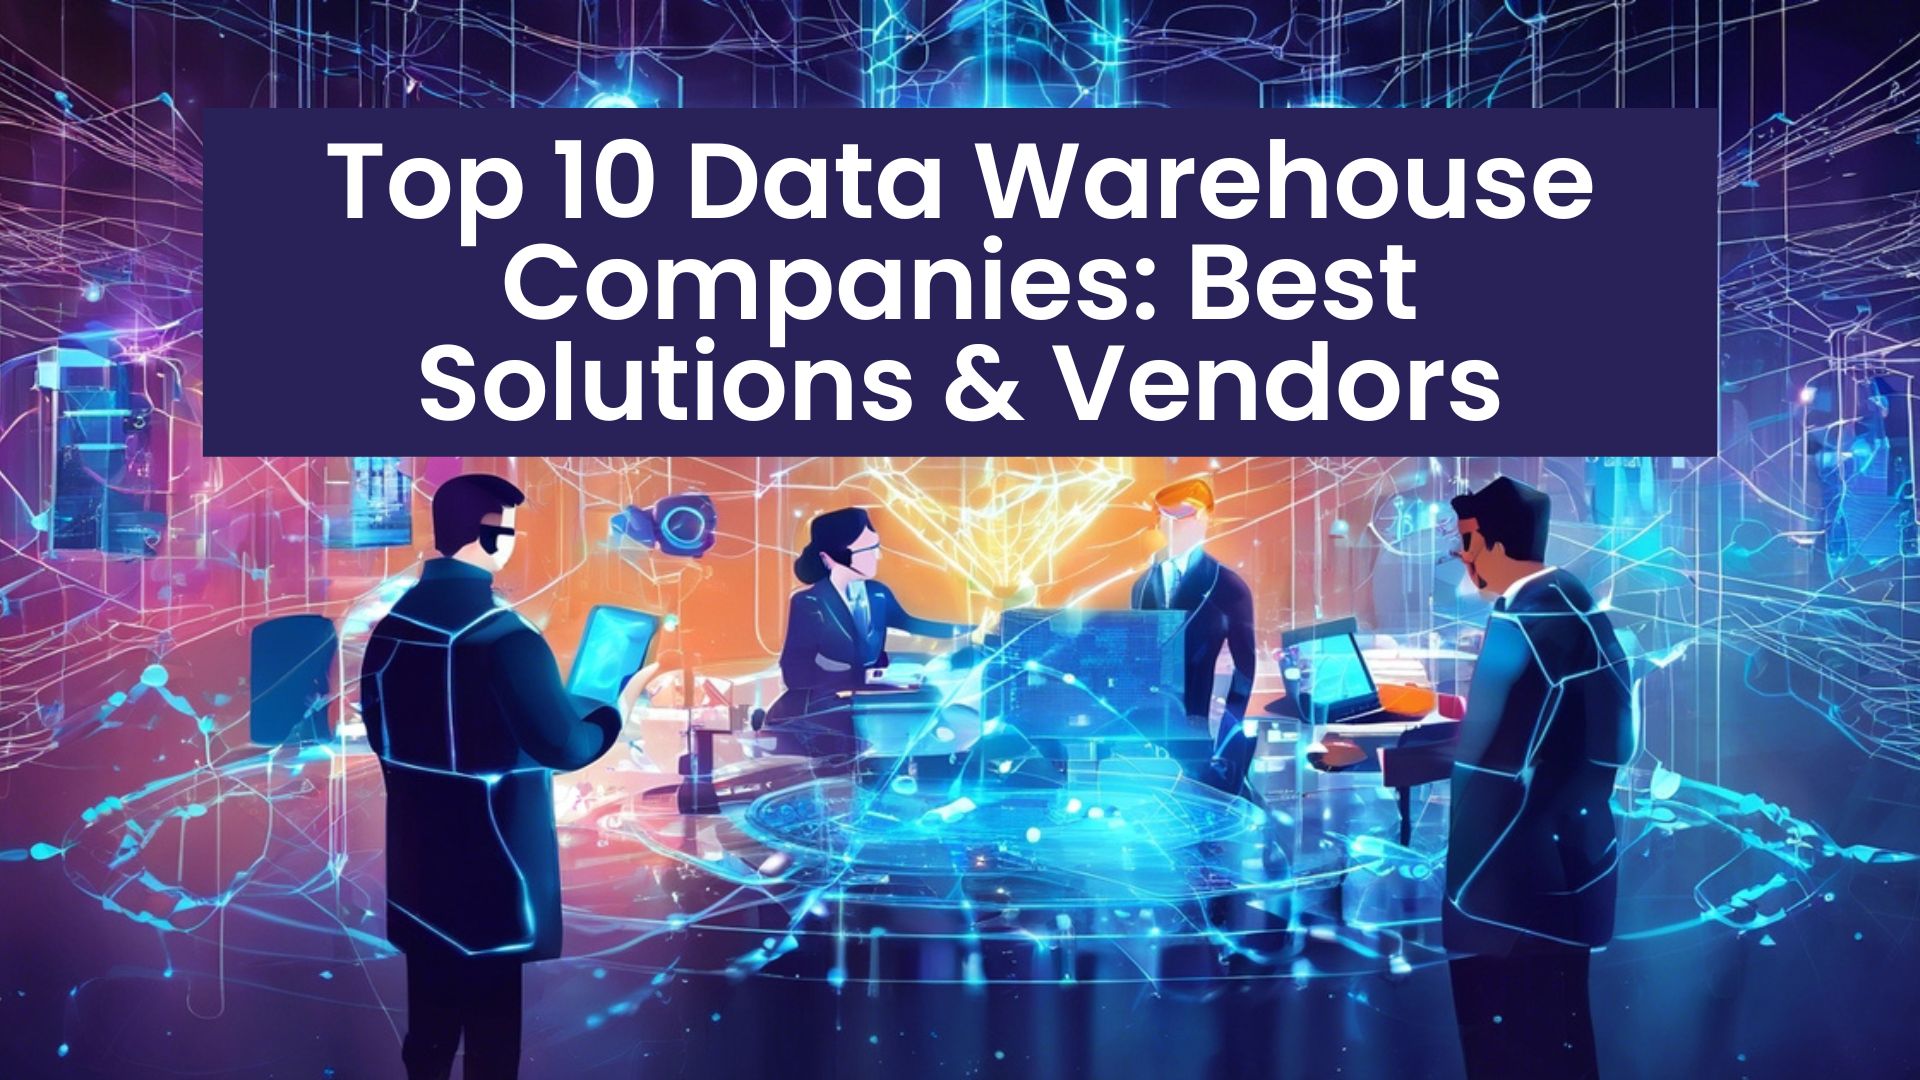 Top 10 Data Warehouse Companies Best Solutions & Vendors